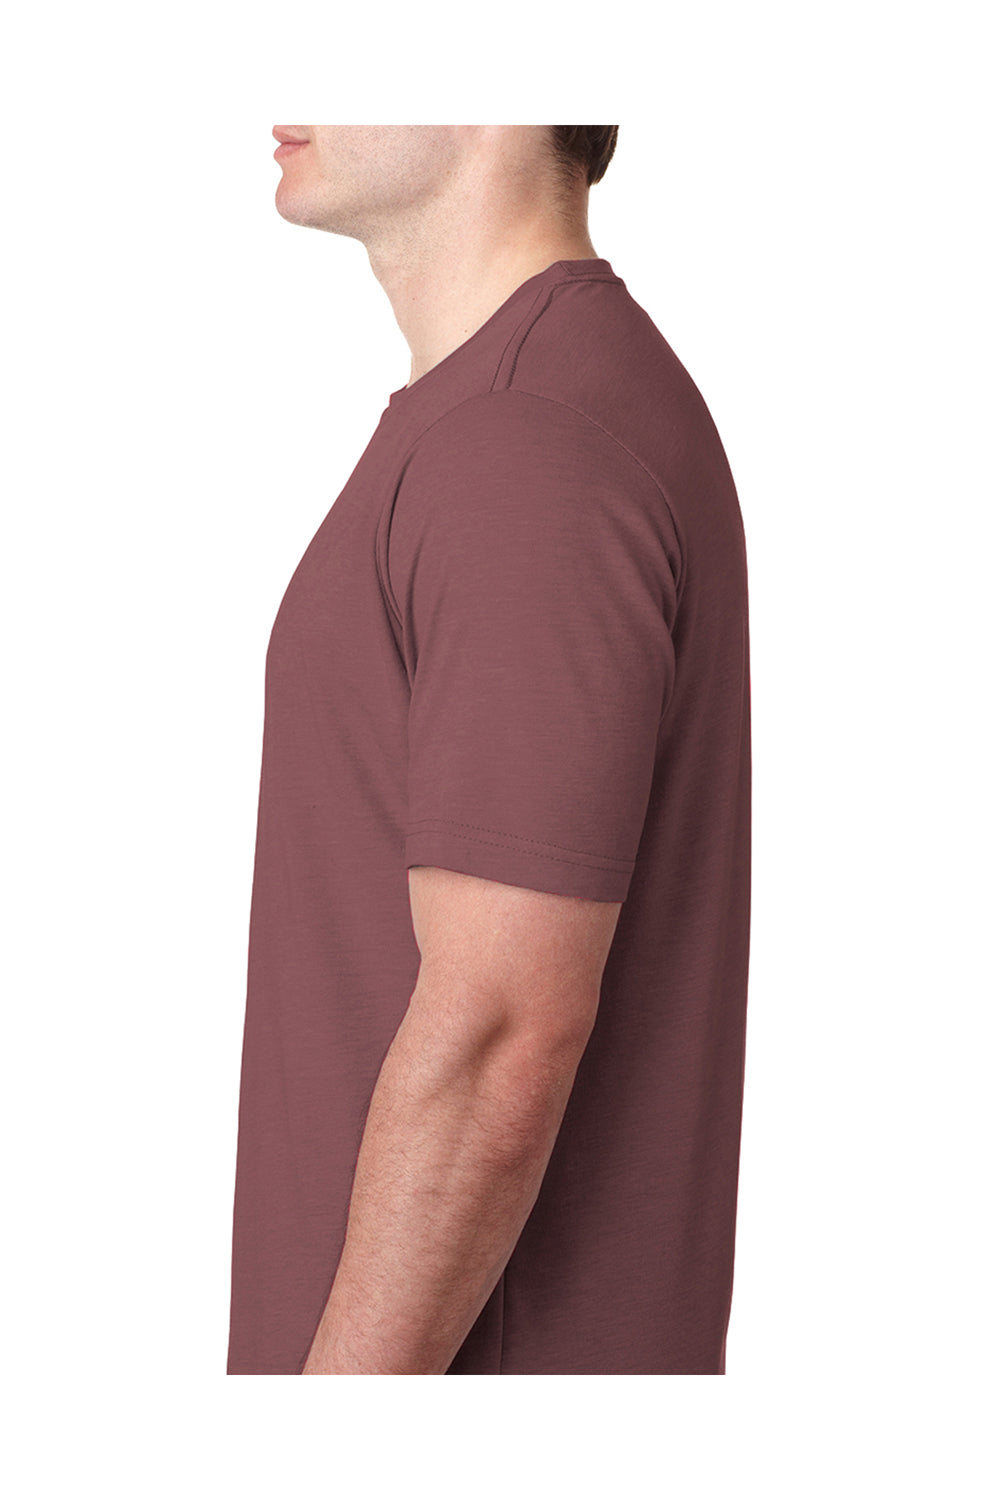 Next Level 6200 Mens Jersey Short Sleeve Crewneck T-Shirt Shiraz Red Side